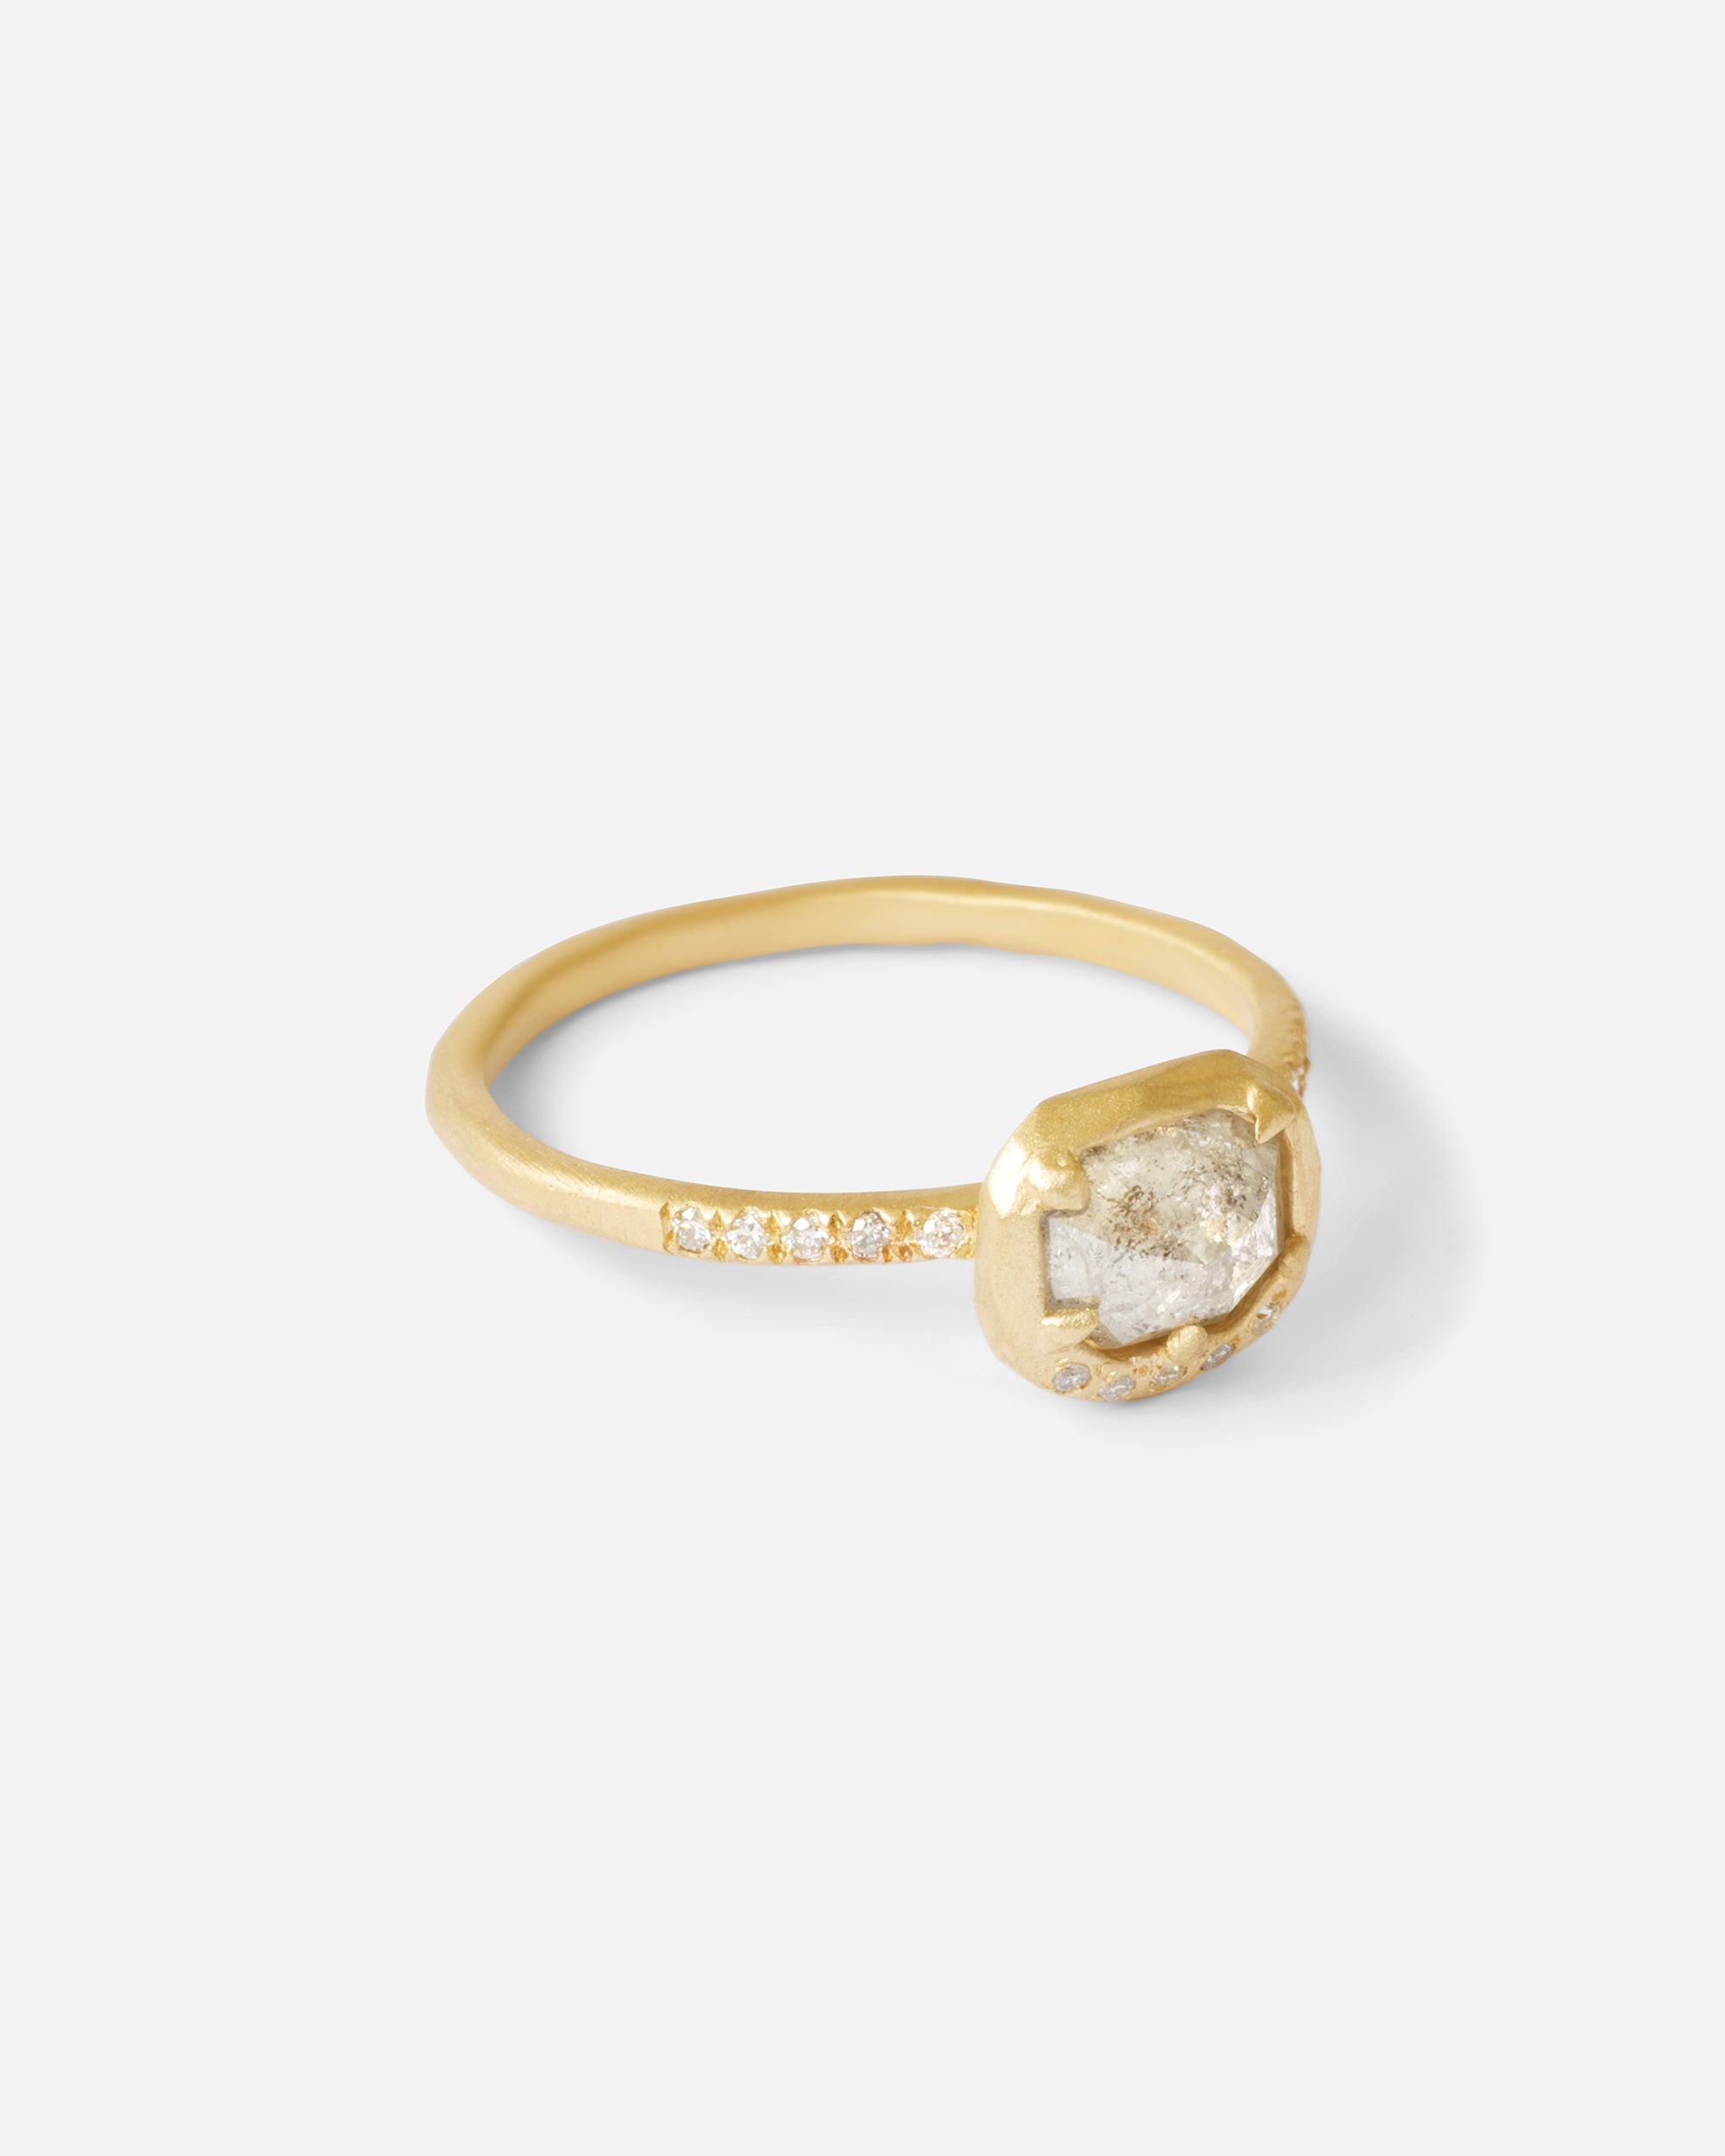 Oval Shaped Diamond Ring By Ariko